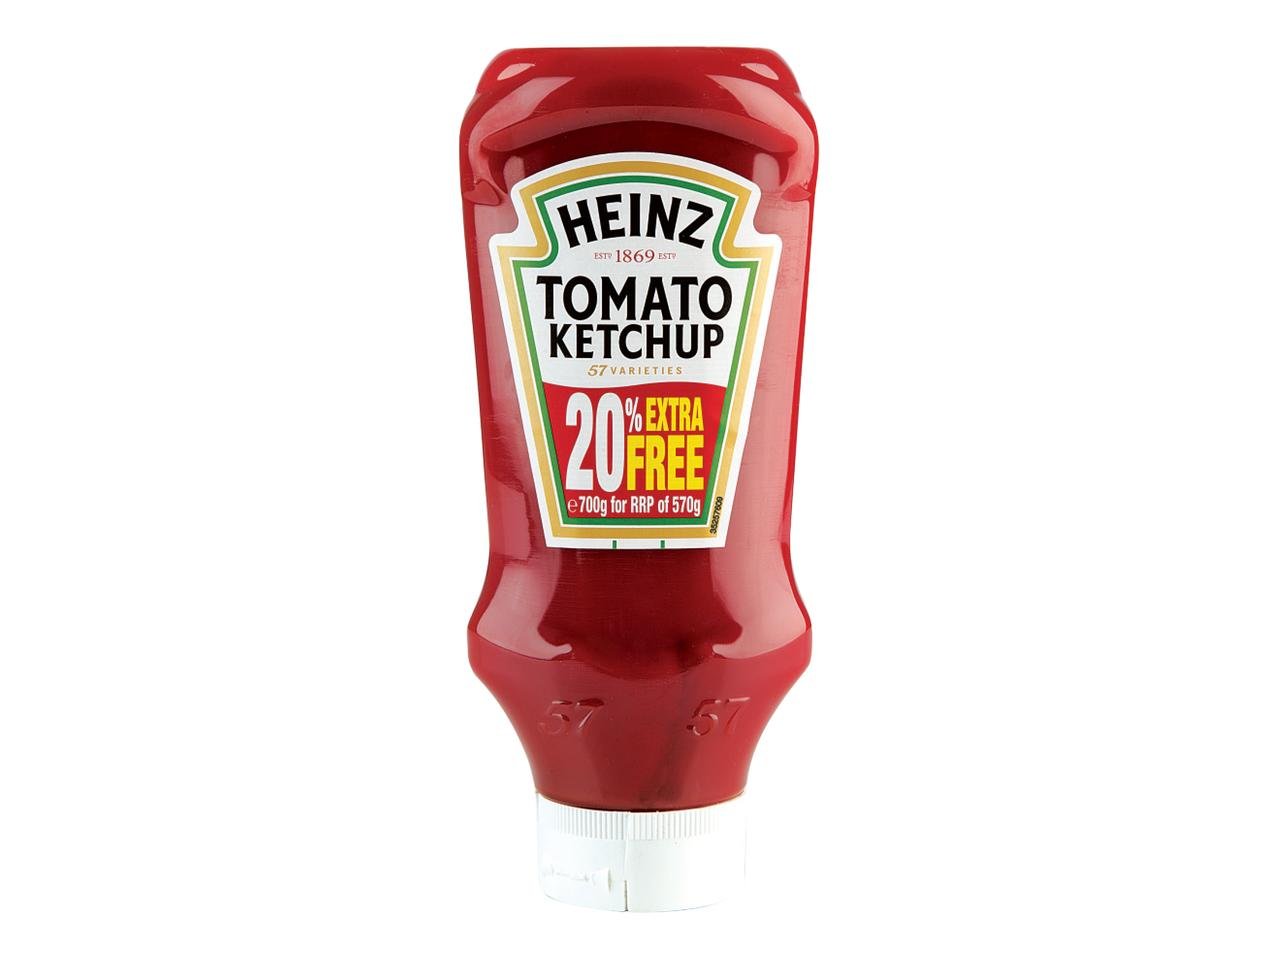 Кетчуп на английском. Heinz Tomato Ketchup. "Ketchup ""Heinz"" Tomato 570g  ". Ketchup "Heinz" Tomato, 550 g. 87157239|Heinz Ketchup tomate 570g.